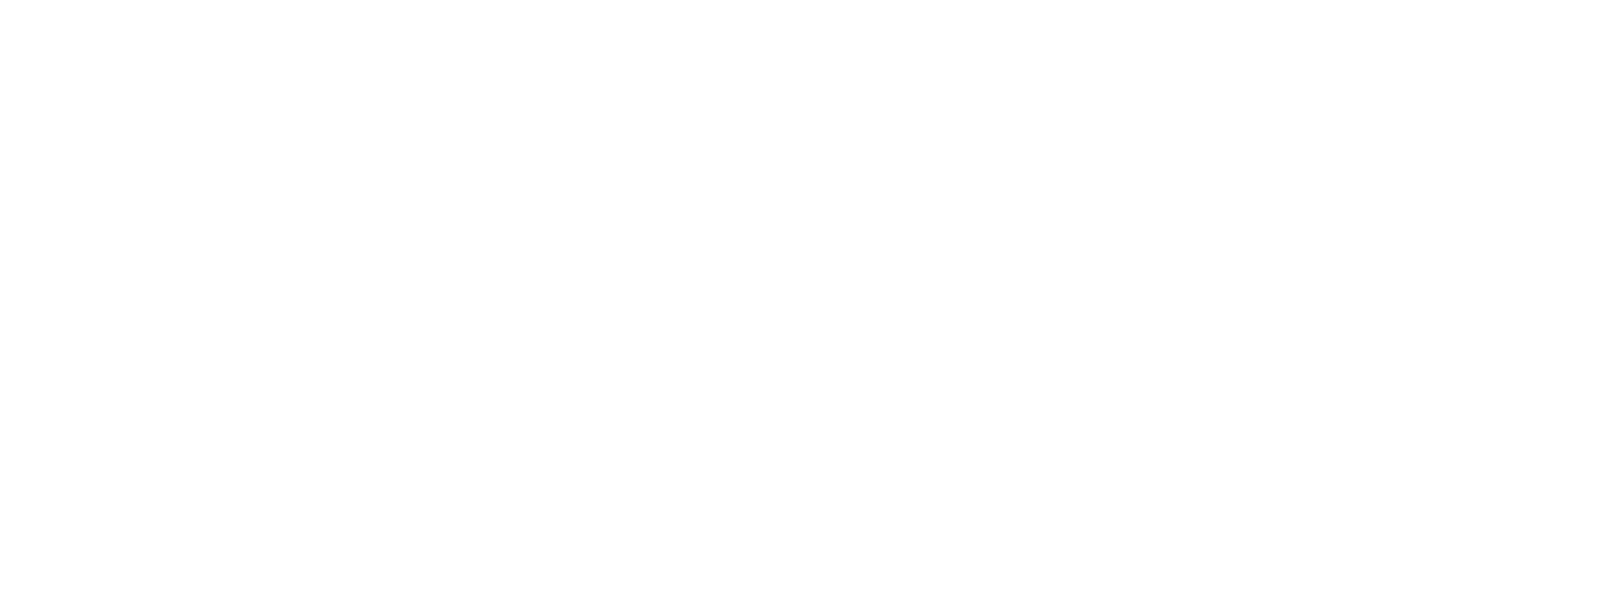 St. Charles Station